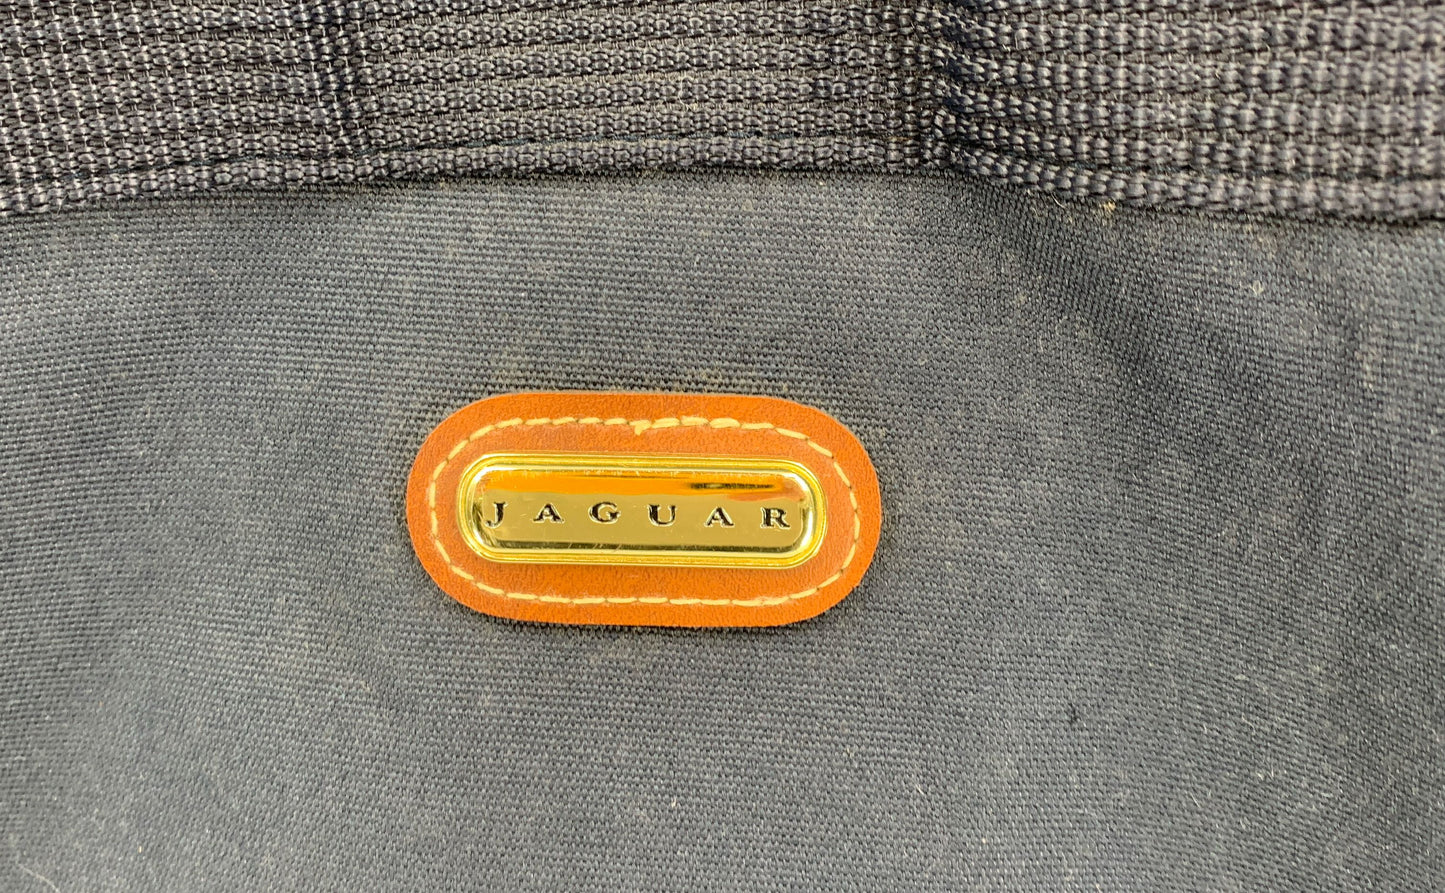 Vintage Jaguar Travel Bag With Carrying Strap 13"x8.5"x9.5"